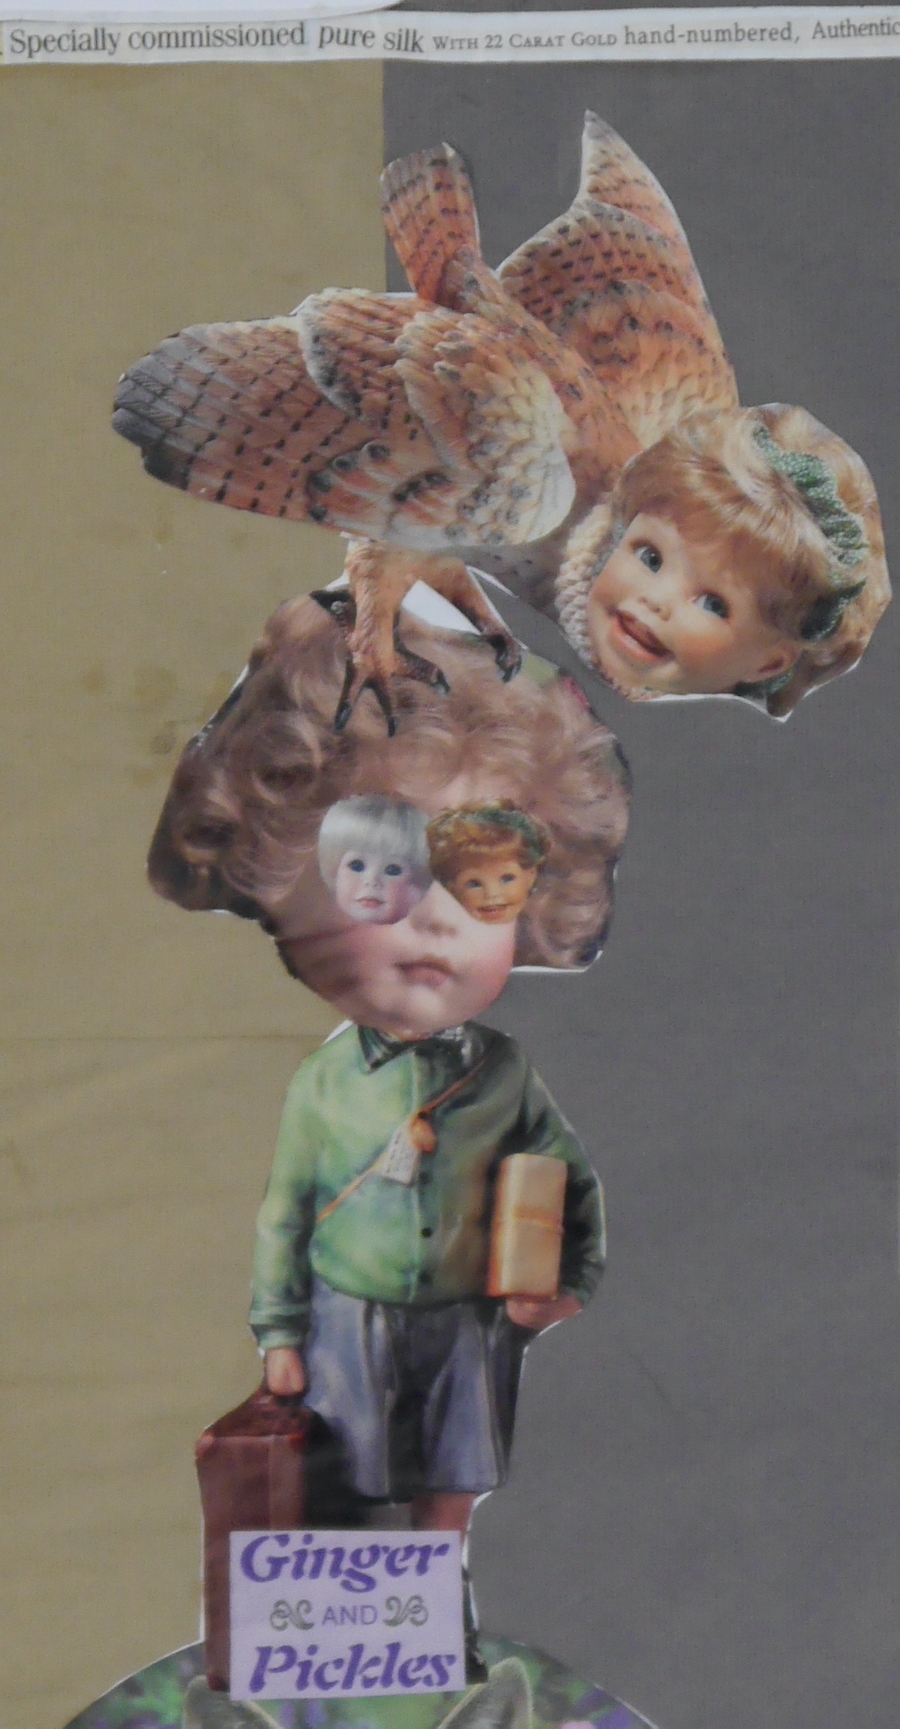 contemporary fine art collage of kitsch animals and trinkets by saatchiart artist Christian Dodd